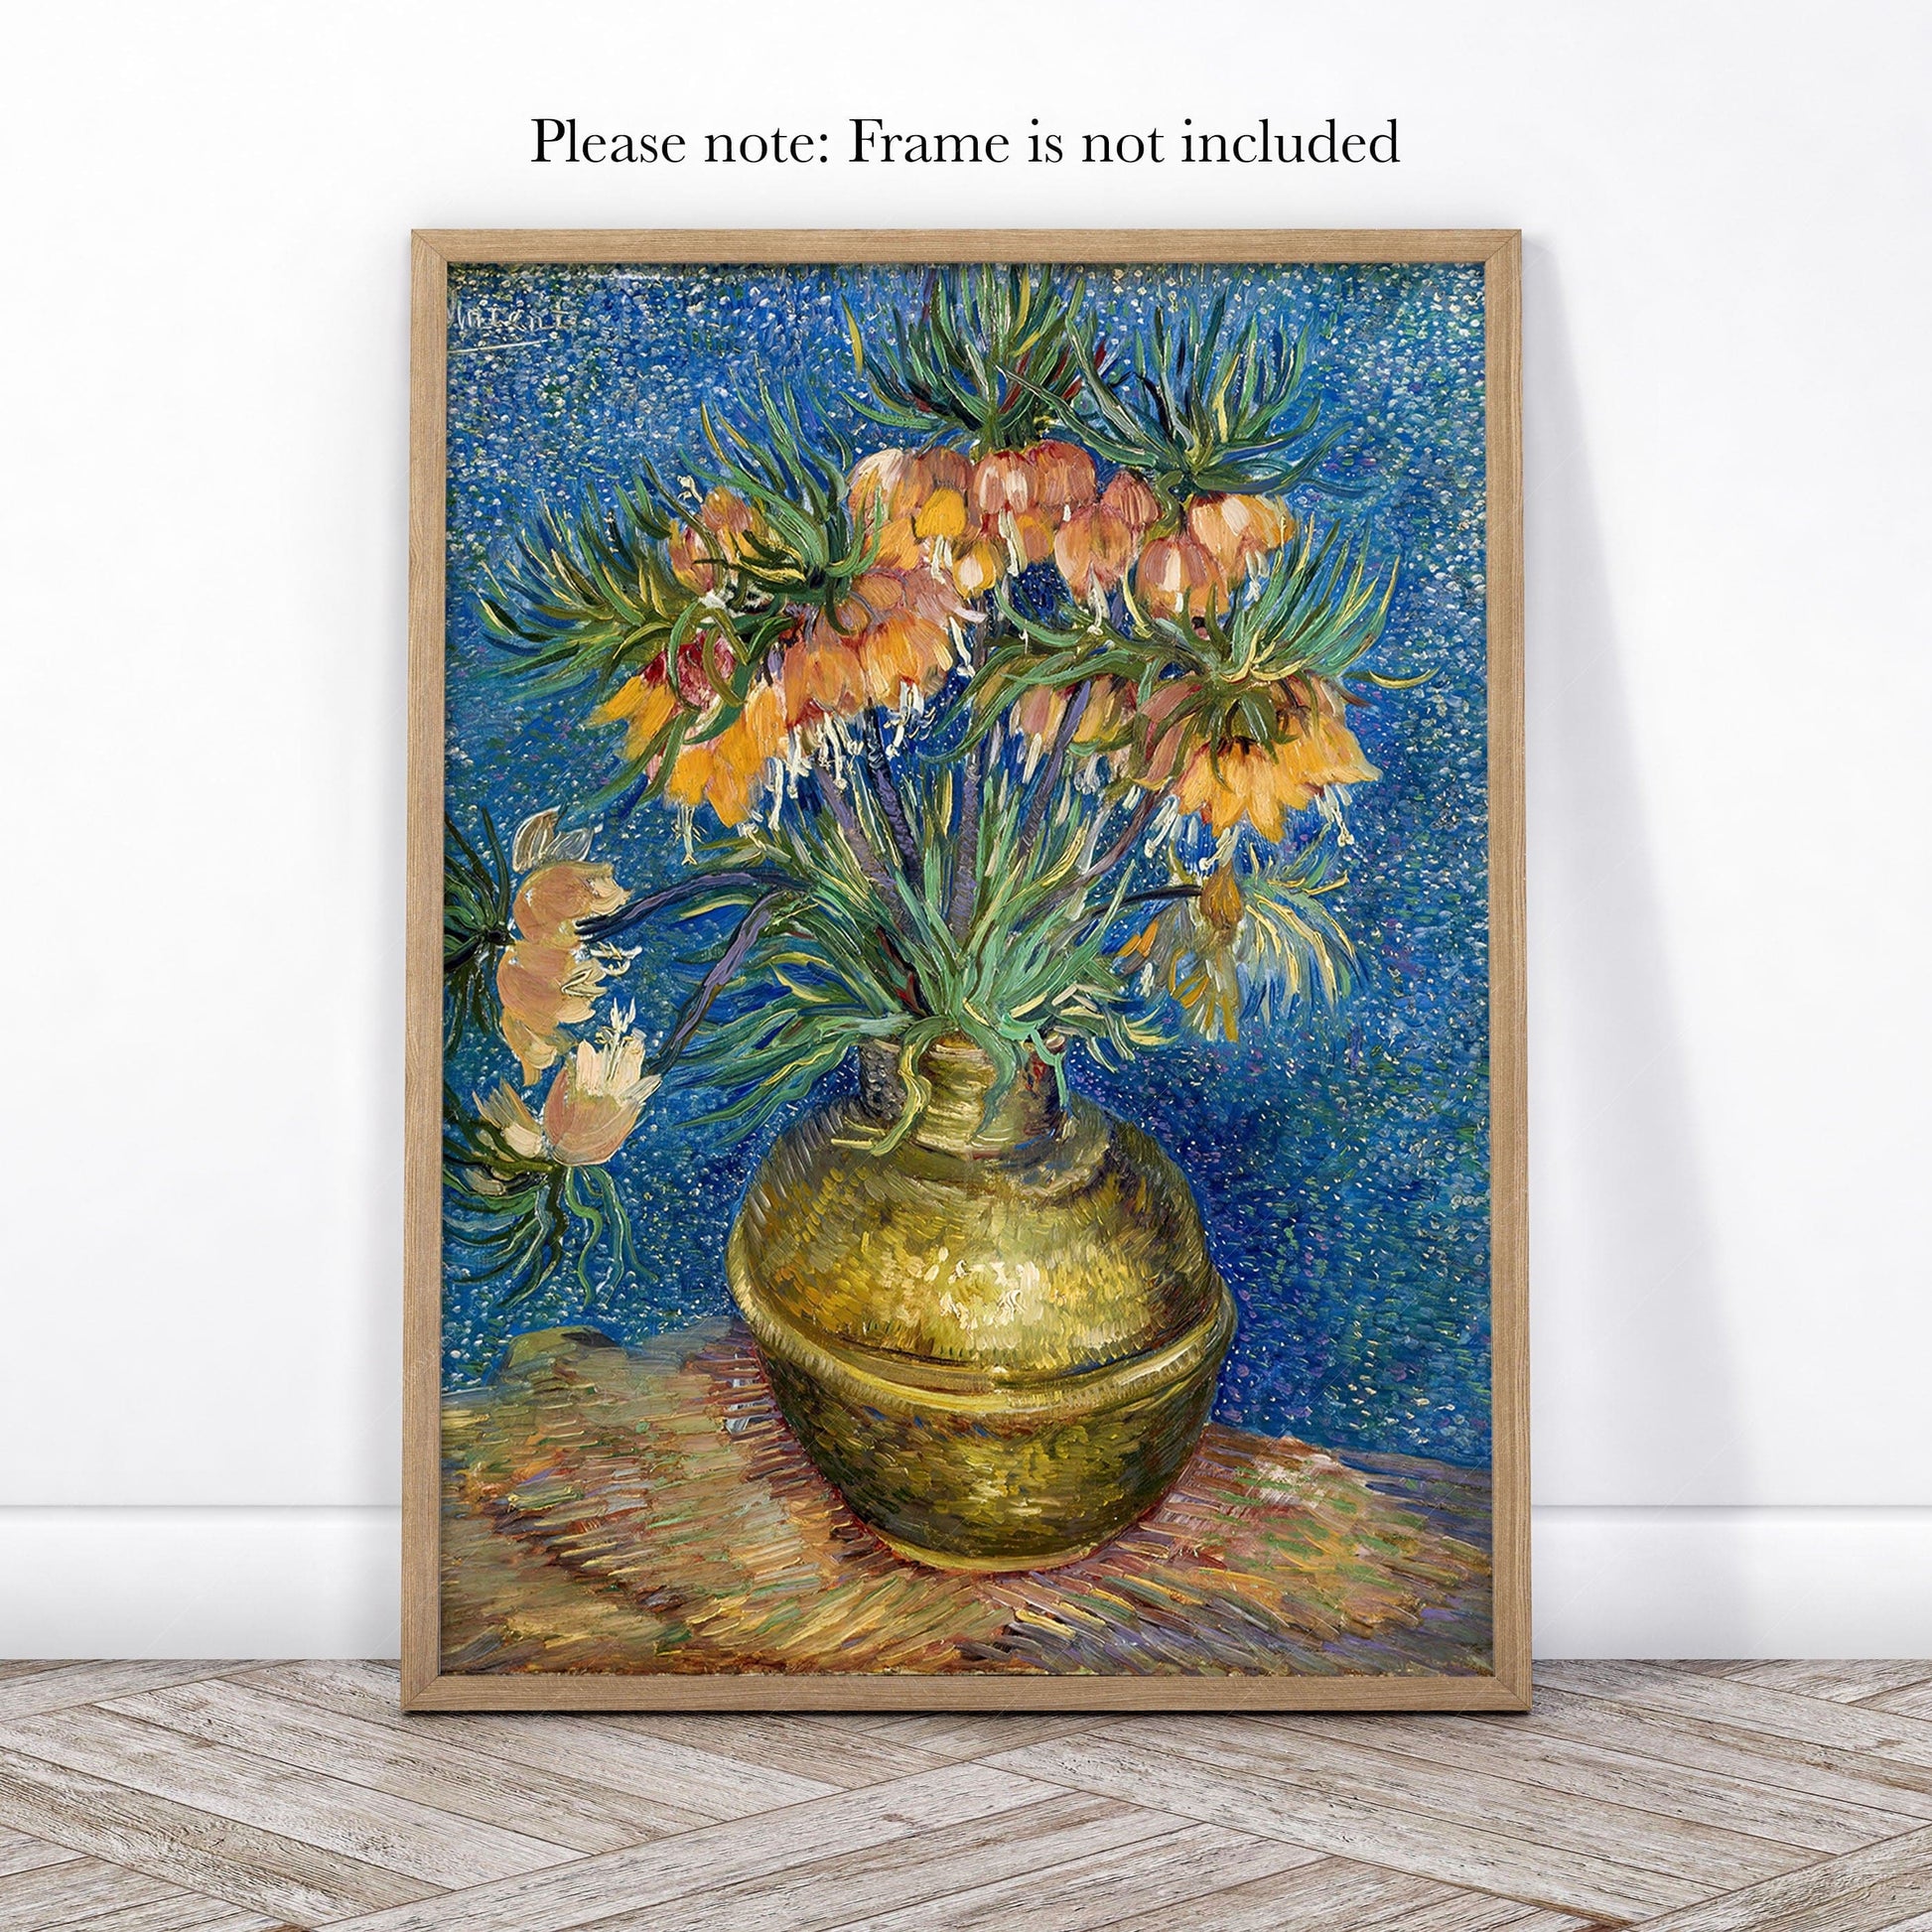 Home Poster Decor Vincent Van Gogh Set of 3 prints Flower in vase Irises still life Wedding gift Above bed set Classic wall art Van Gogh flowers Bedroom art